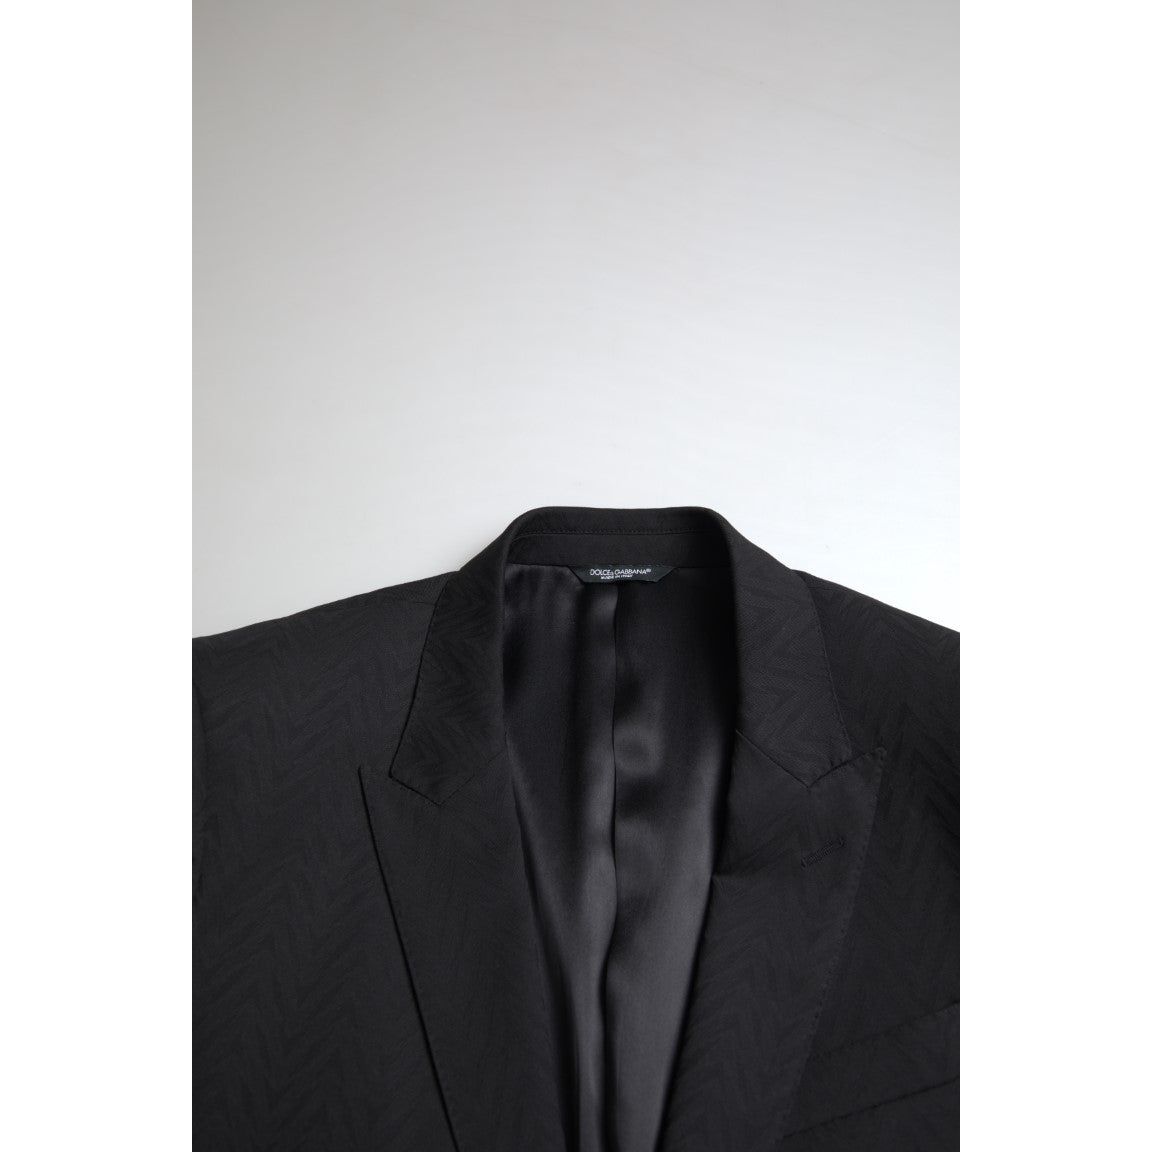 Dolce & GabbanaExclusive Martini Black Slim Fit SuitMcRichard Designer Brands£1189.00